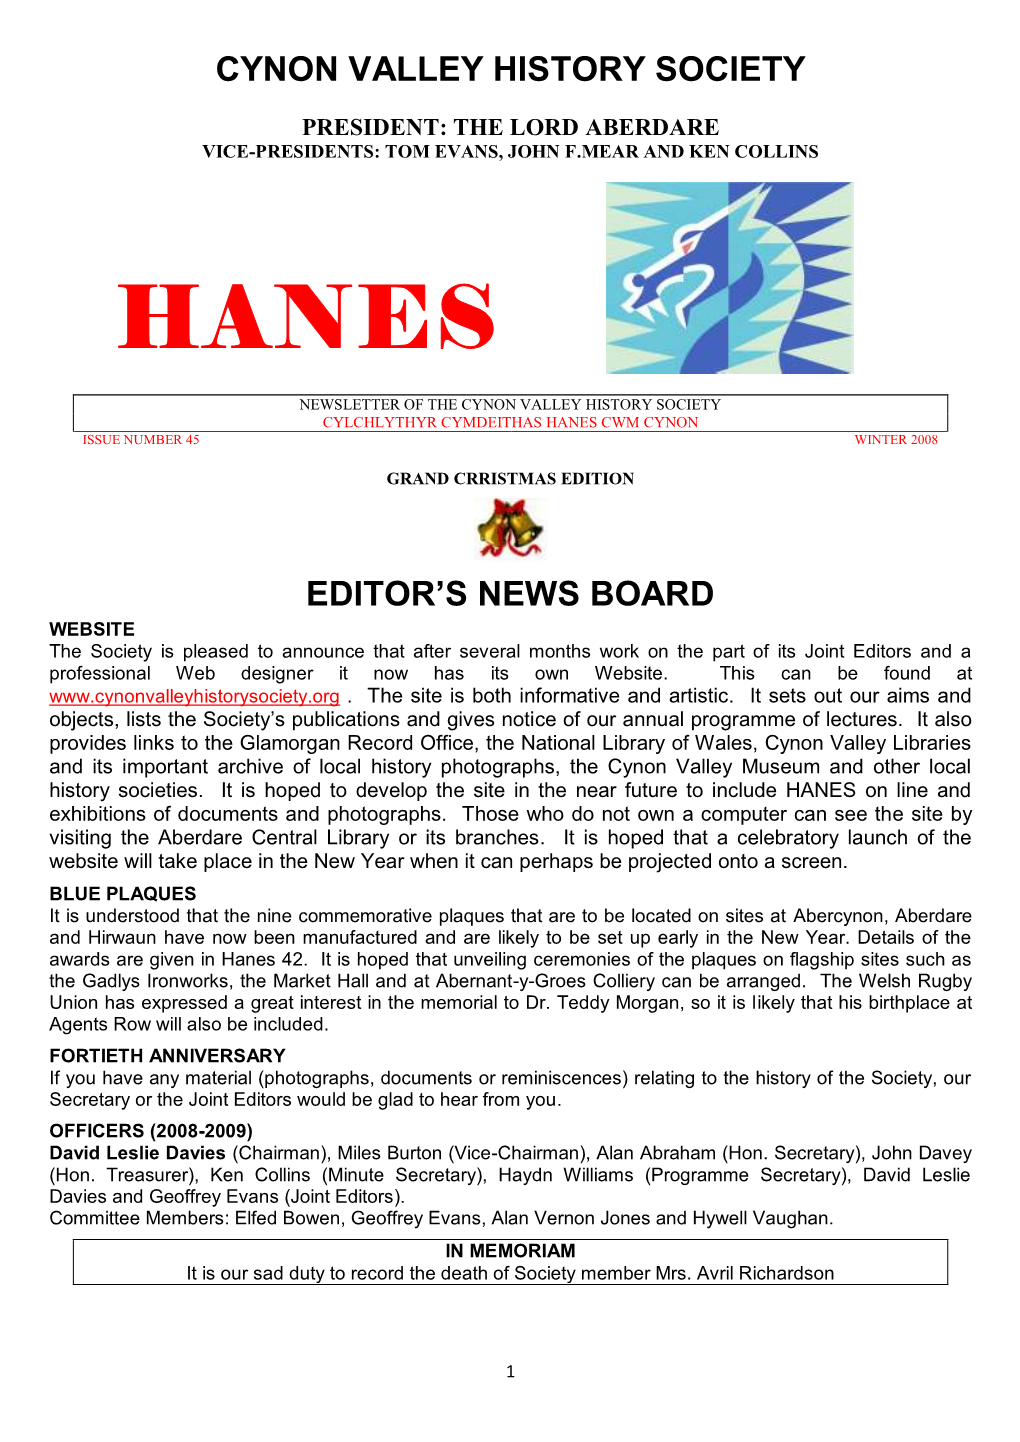 Cynon Valley History Society Editor's News Board